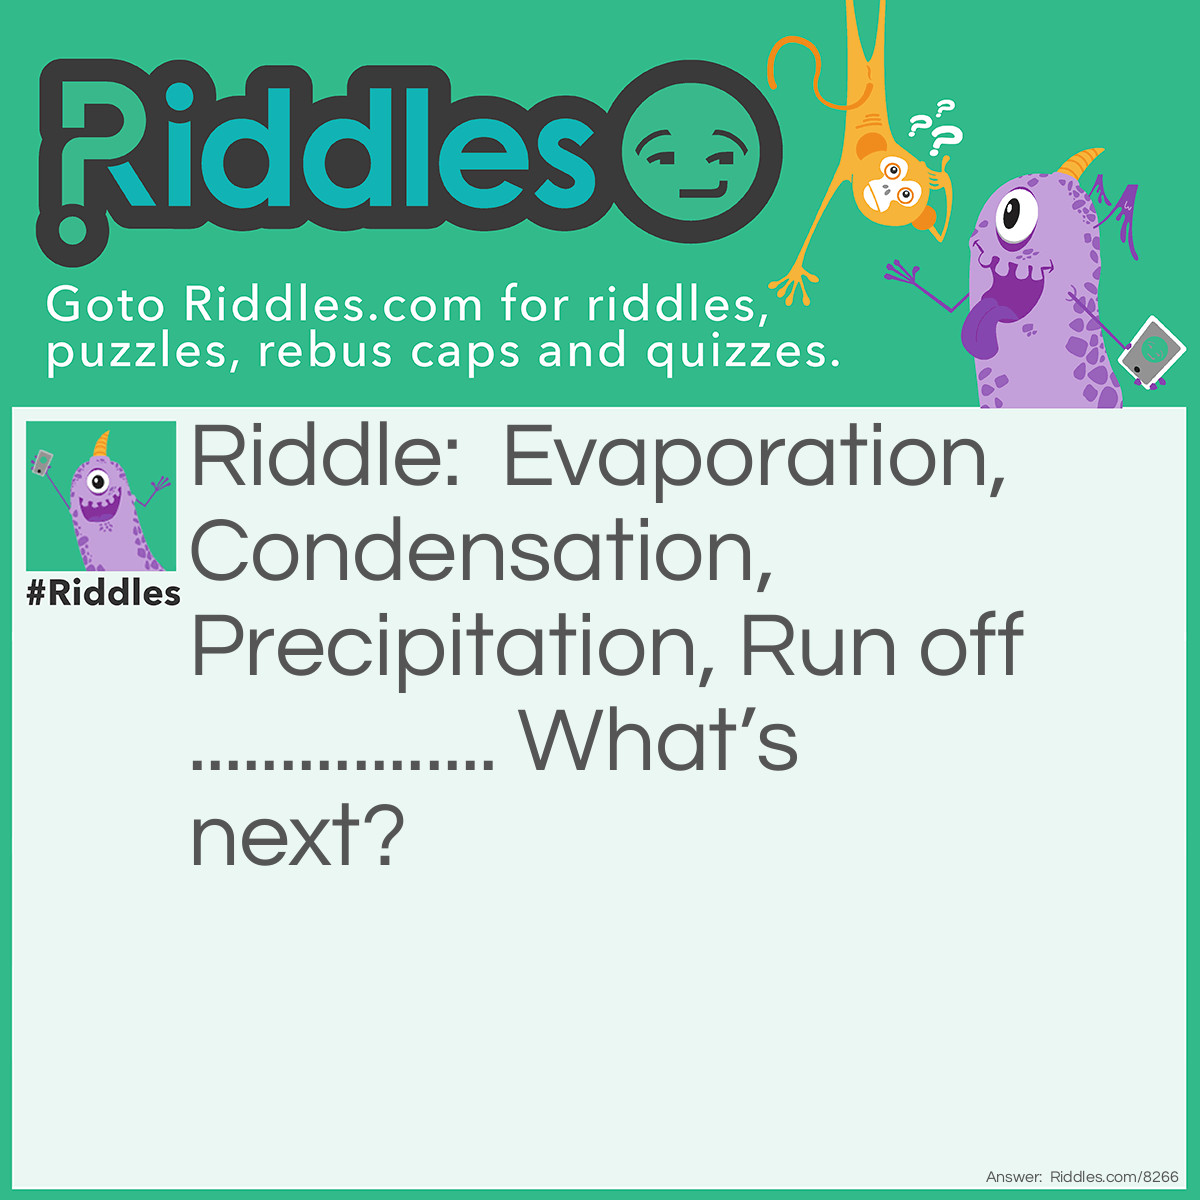 Riddle: Evaporation, Condensation, Precipitation, Run off................. What's next? Answer: Evaporation.